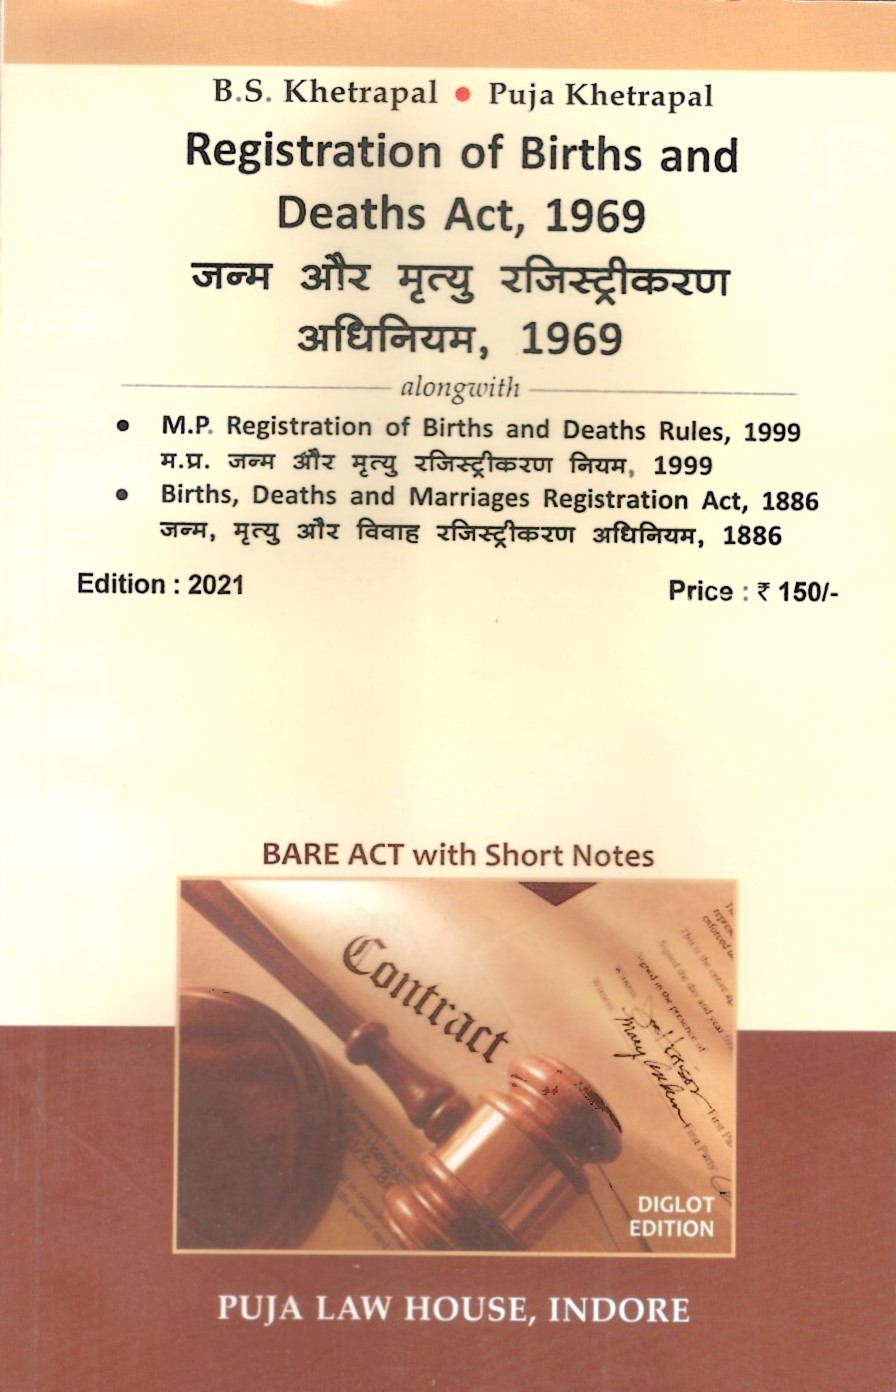  Buy Registration of Birth & Death Act, 1969 with Chhattisgarh Registration of Birth & Death Rules, 1999 / जन्म और मृत्यु रजिस्ट्रीकरण अधिनियम, 1969 साथ ही छत्तीसगढ़  जन्म और मृत्यु रजिस्ट्रीकरण नियम, 1999